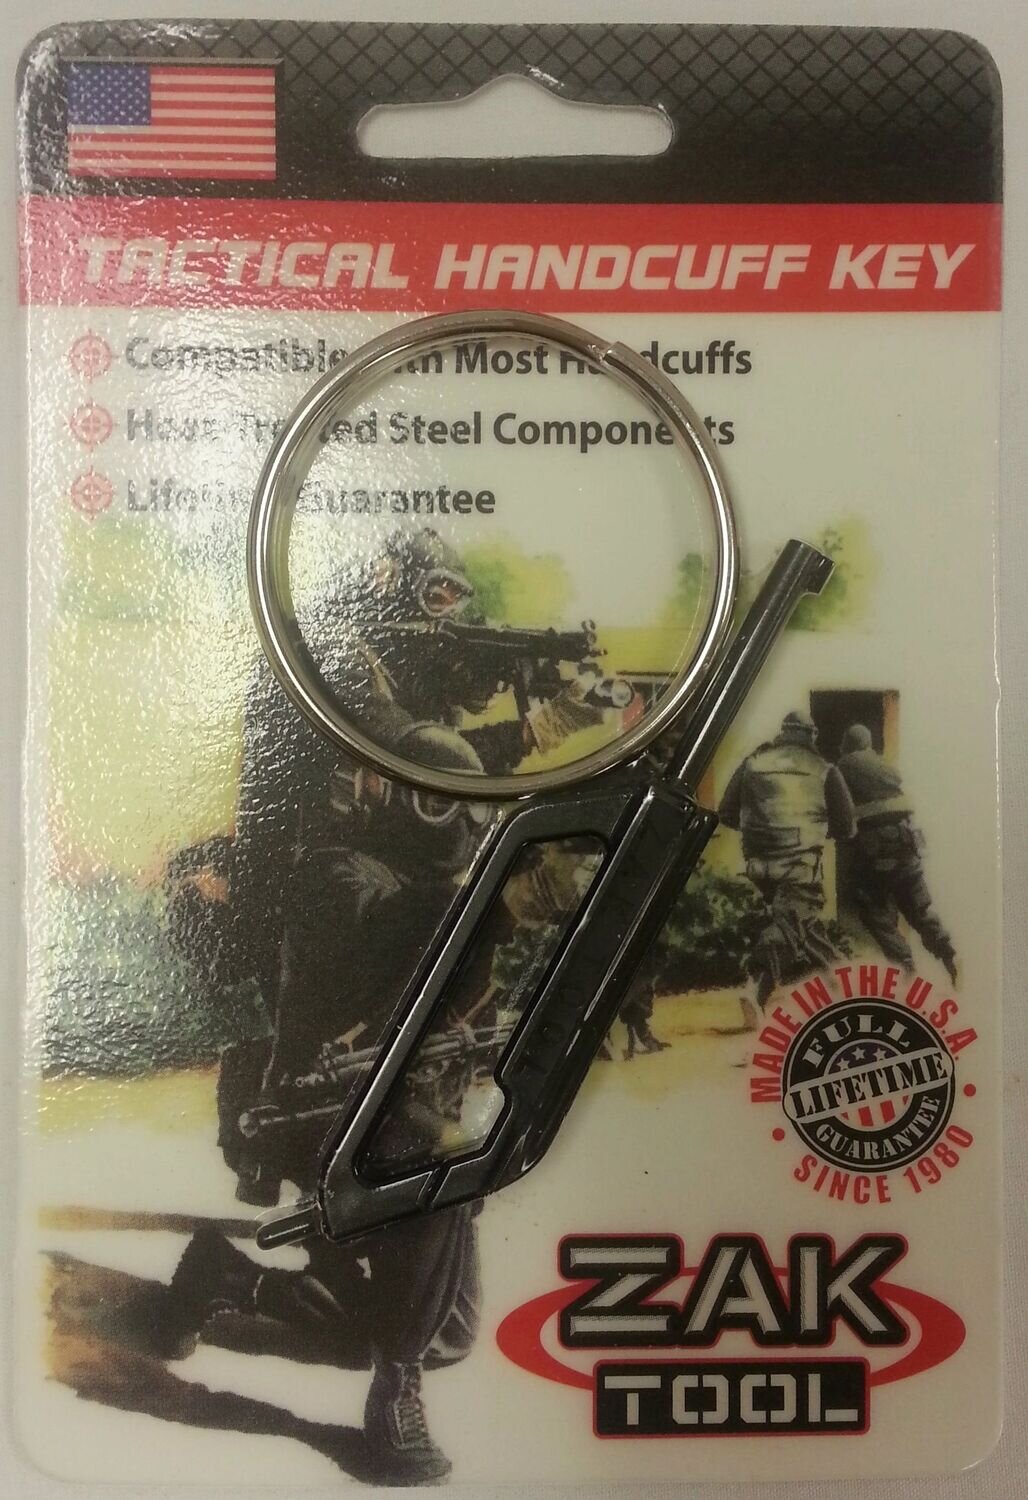 ZT7P Handcuff Key